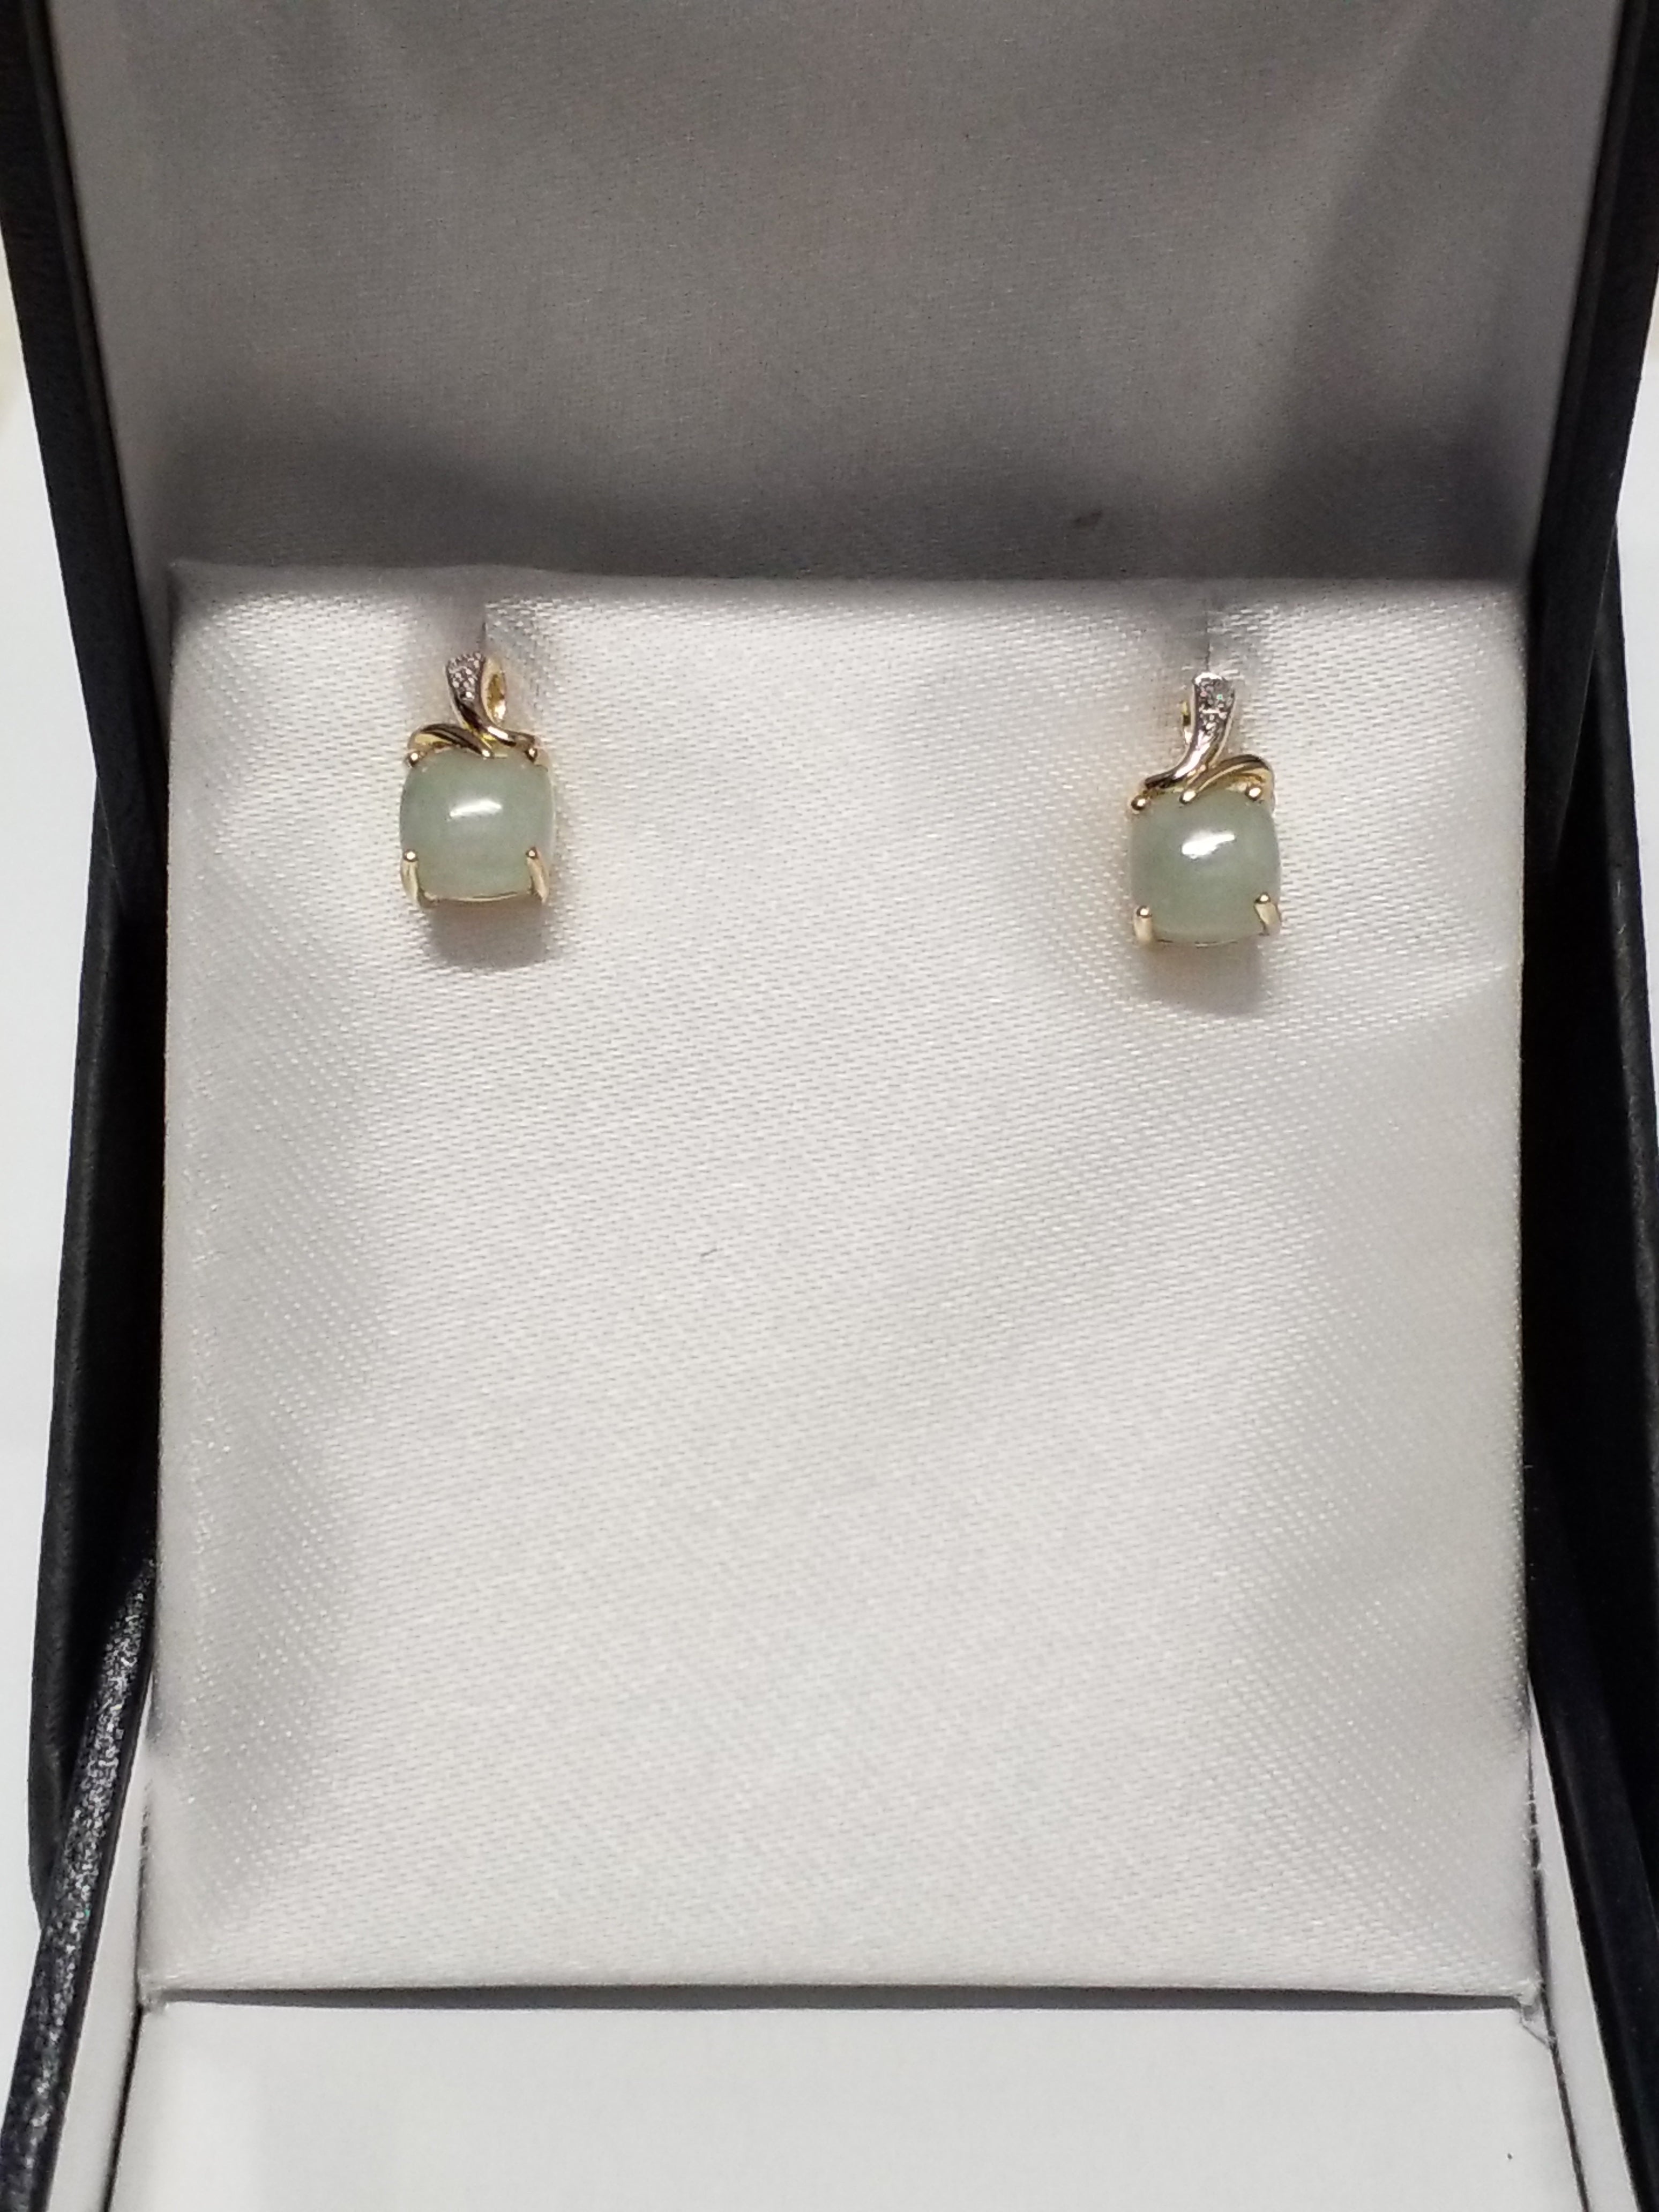 Cabochon Cut Jade Earrings with Diamonds